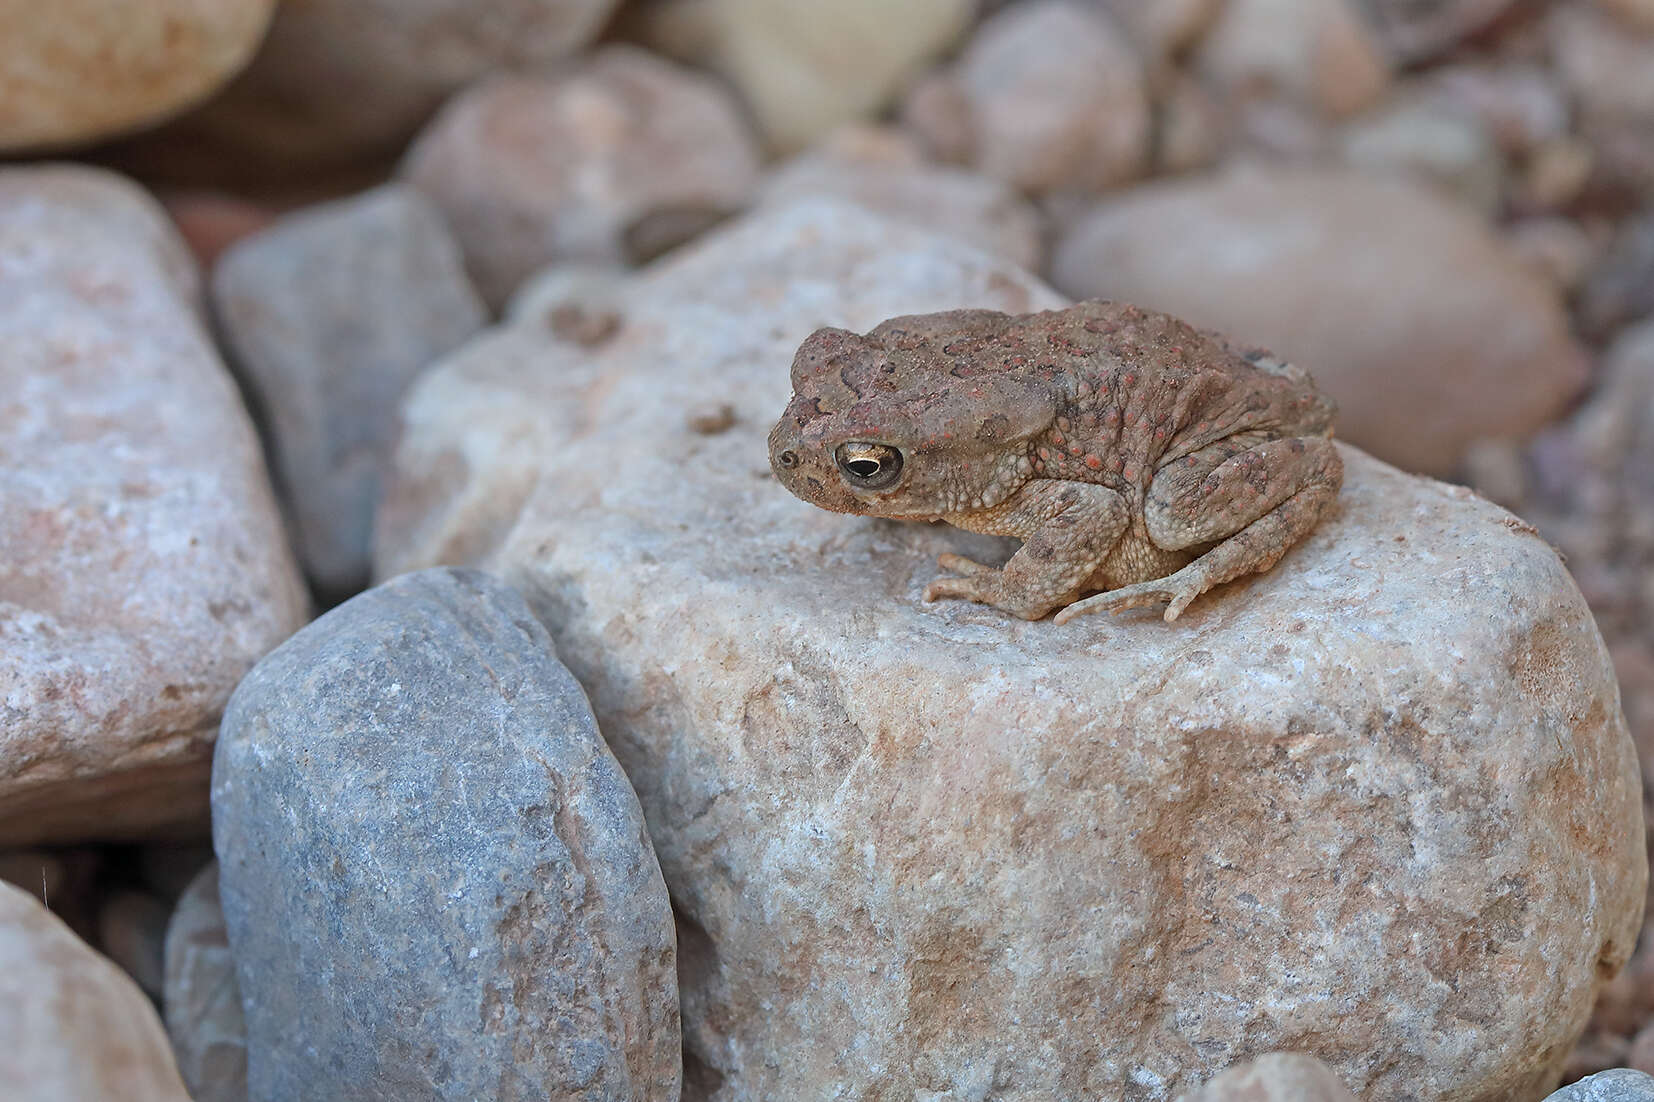 Image of Berber Toad